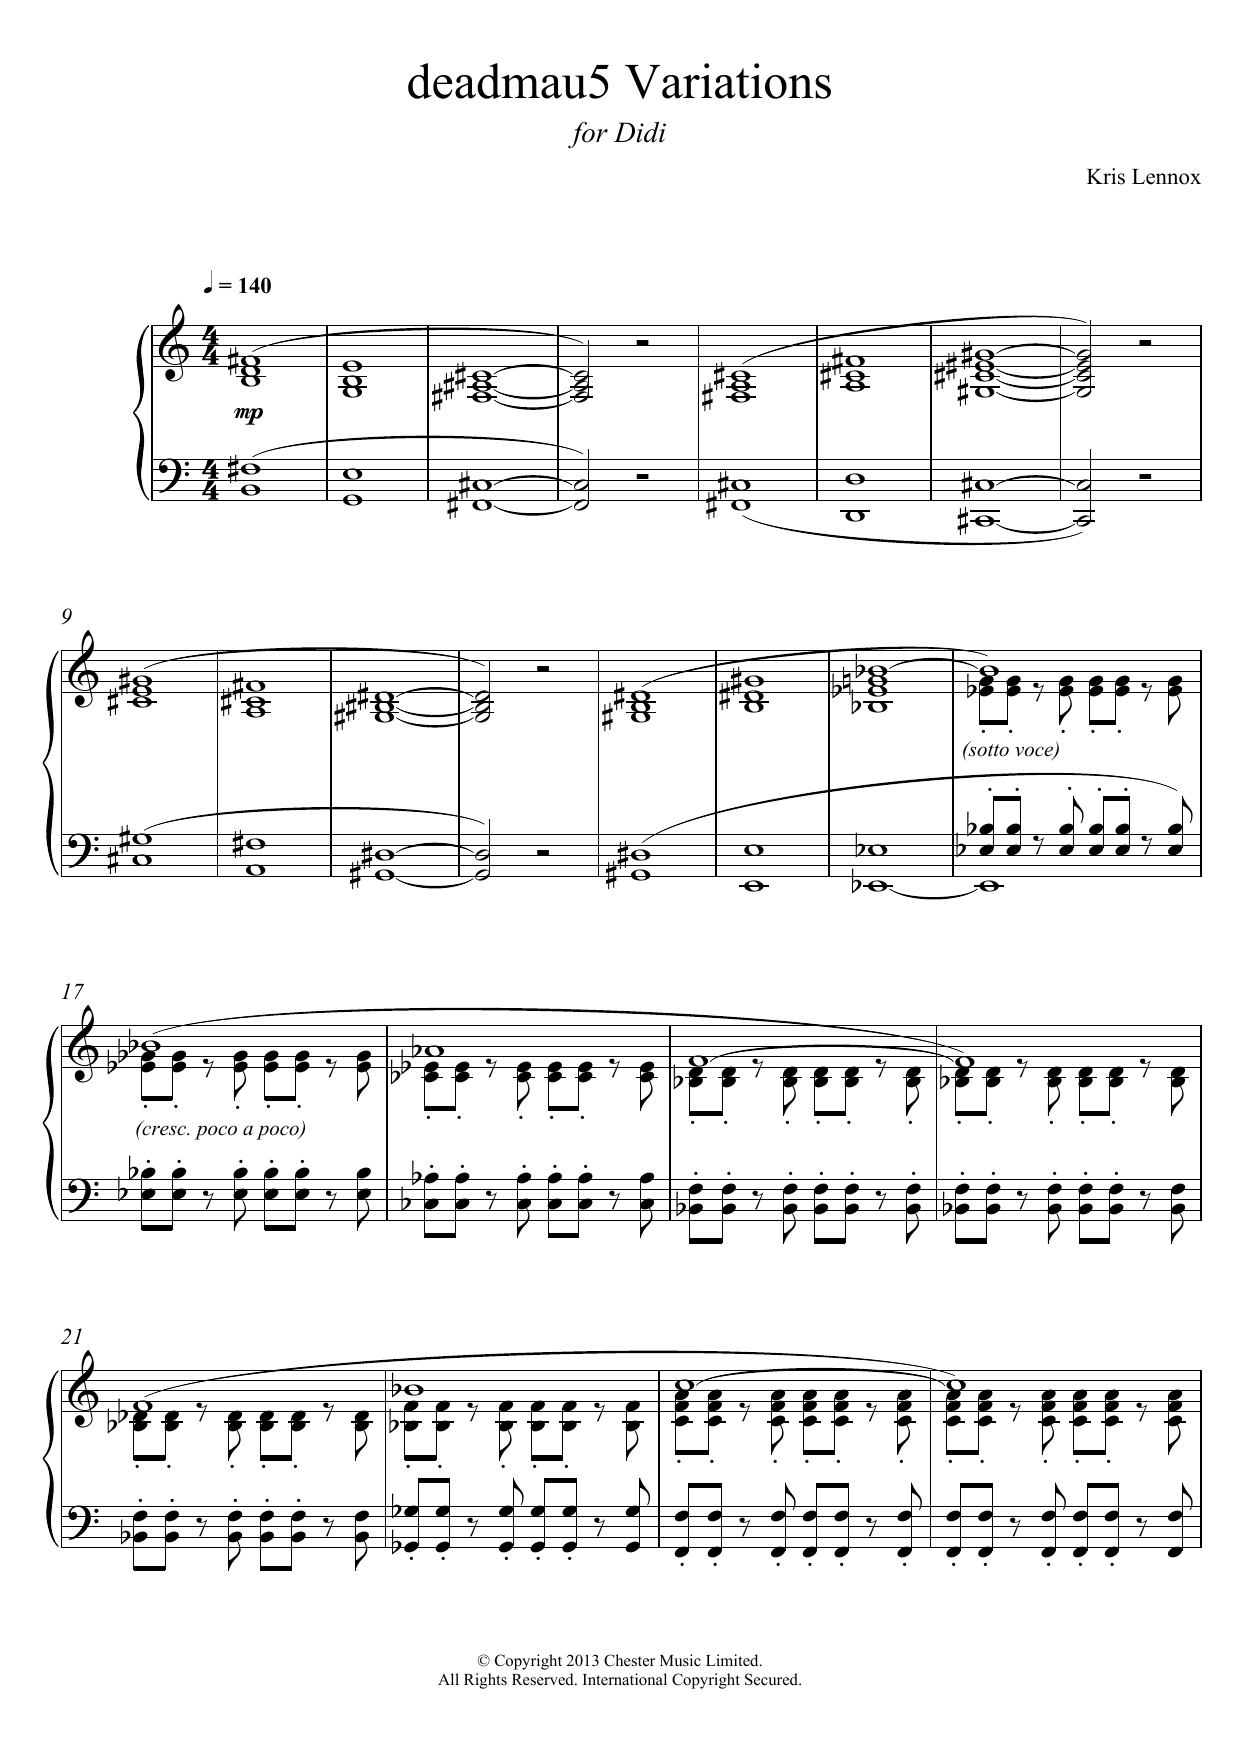 Kris Lennox Deadmau5 Variations Sheet Music Notes & Chords for Piano - Download or Print PDF